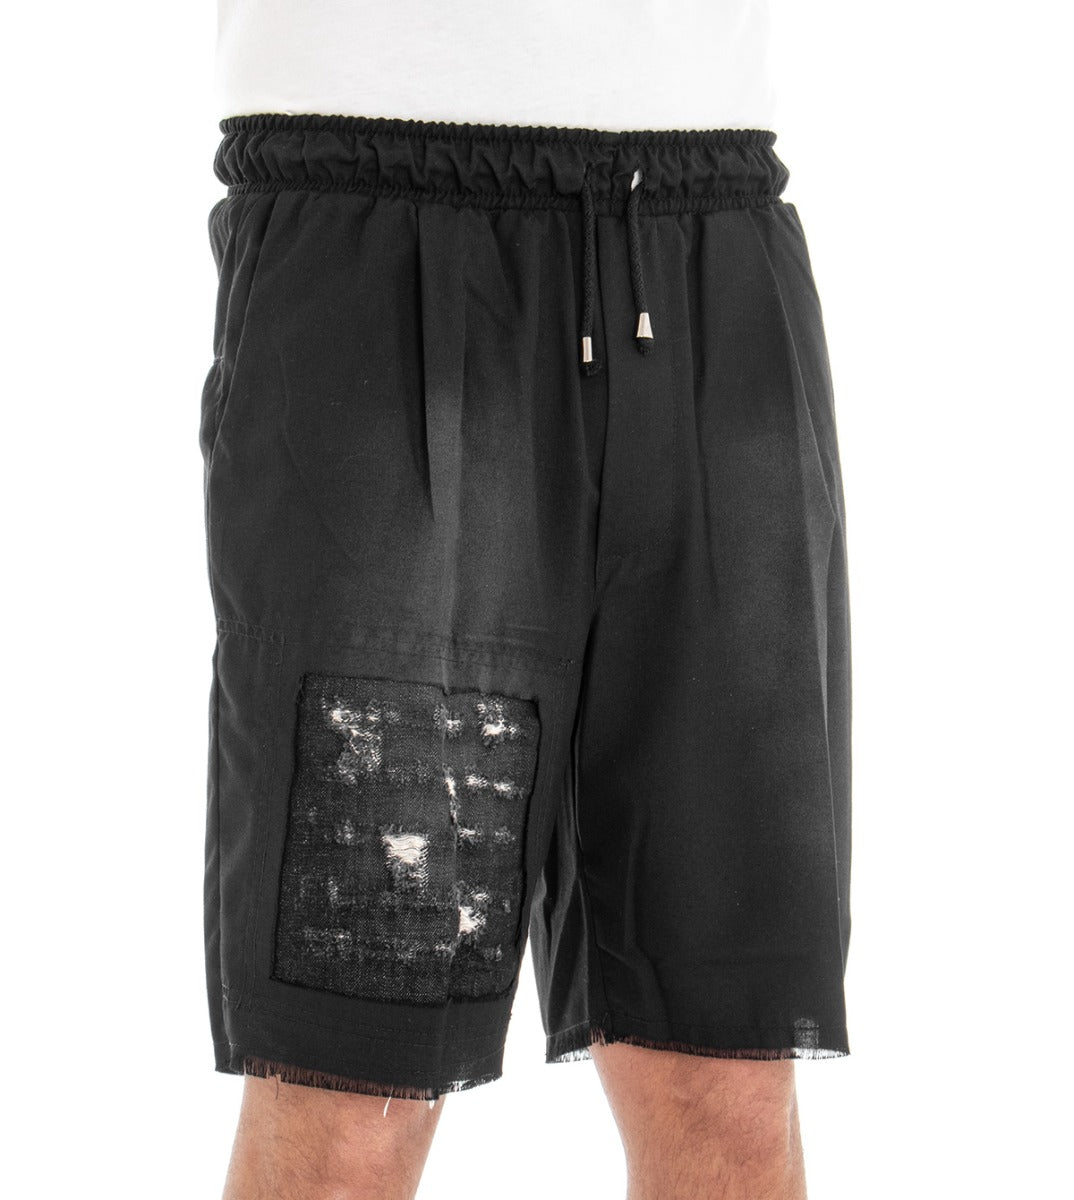 Bermuda Pantaloncino Uomo Tuta Toppa Nero GIOSAL-PC1288A